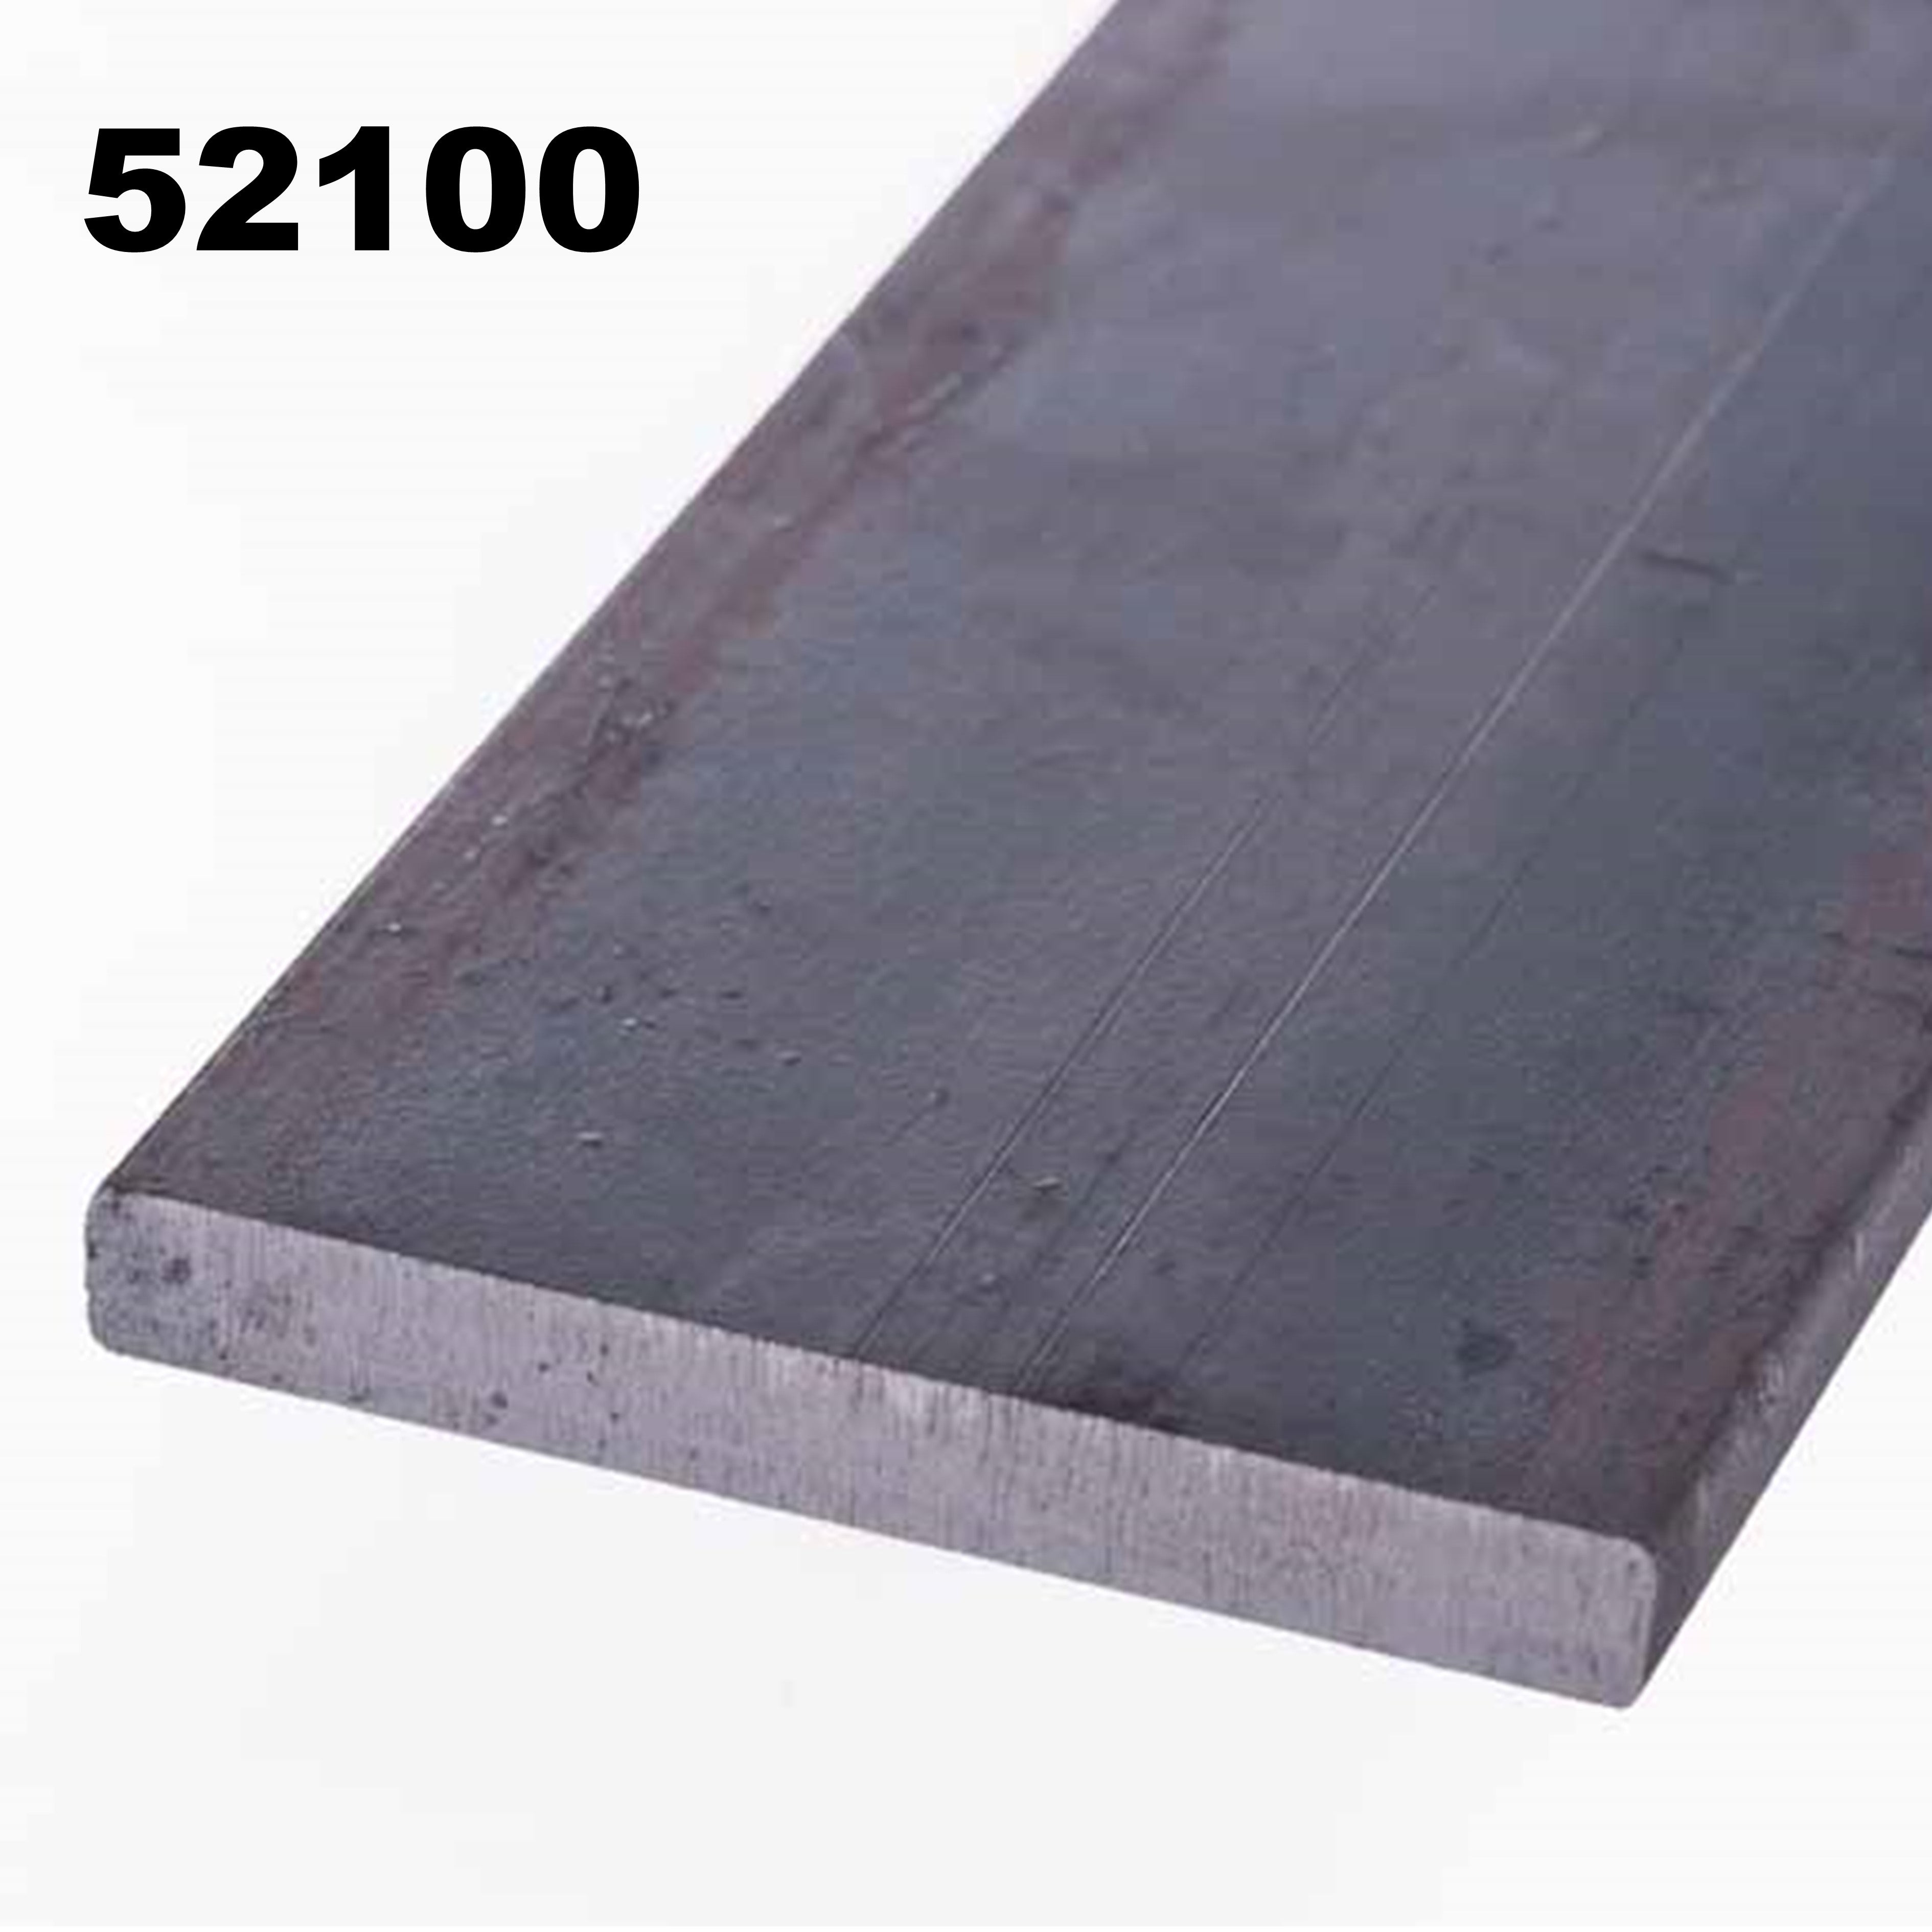 52100 High Carbon Steel Bar (3.2 x 50 x 600mm)